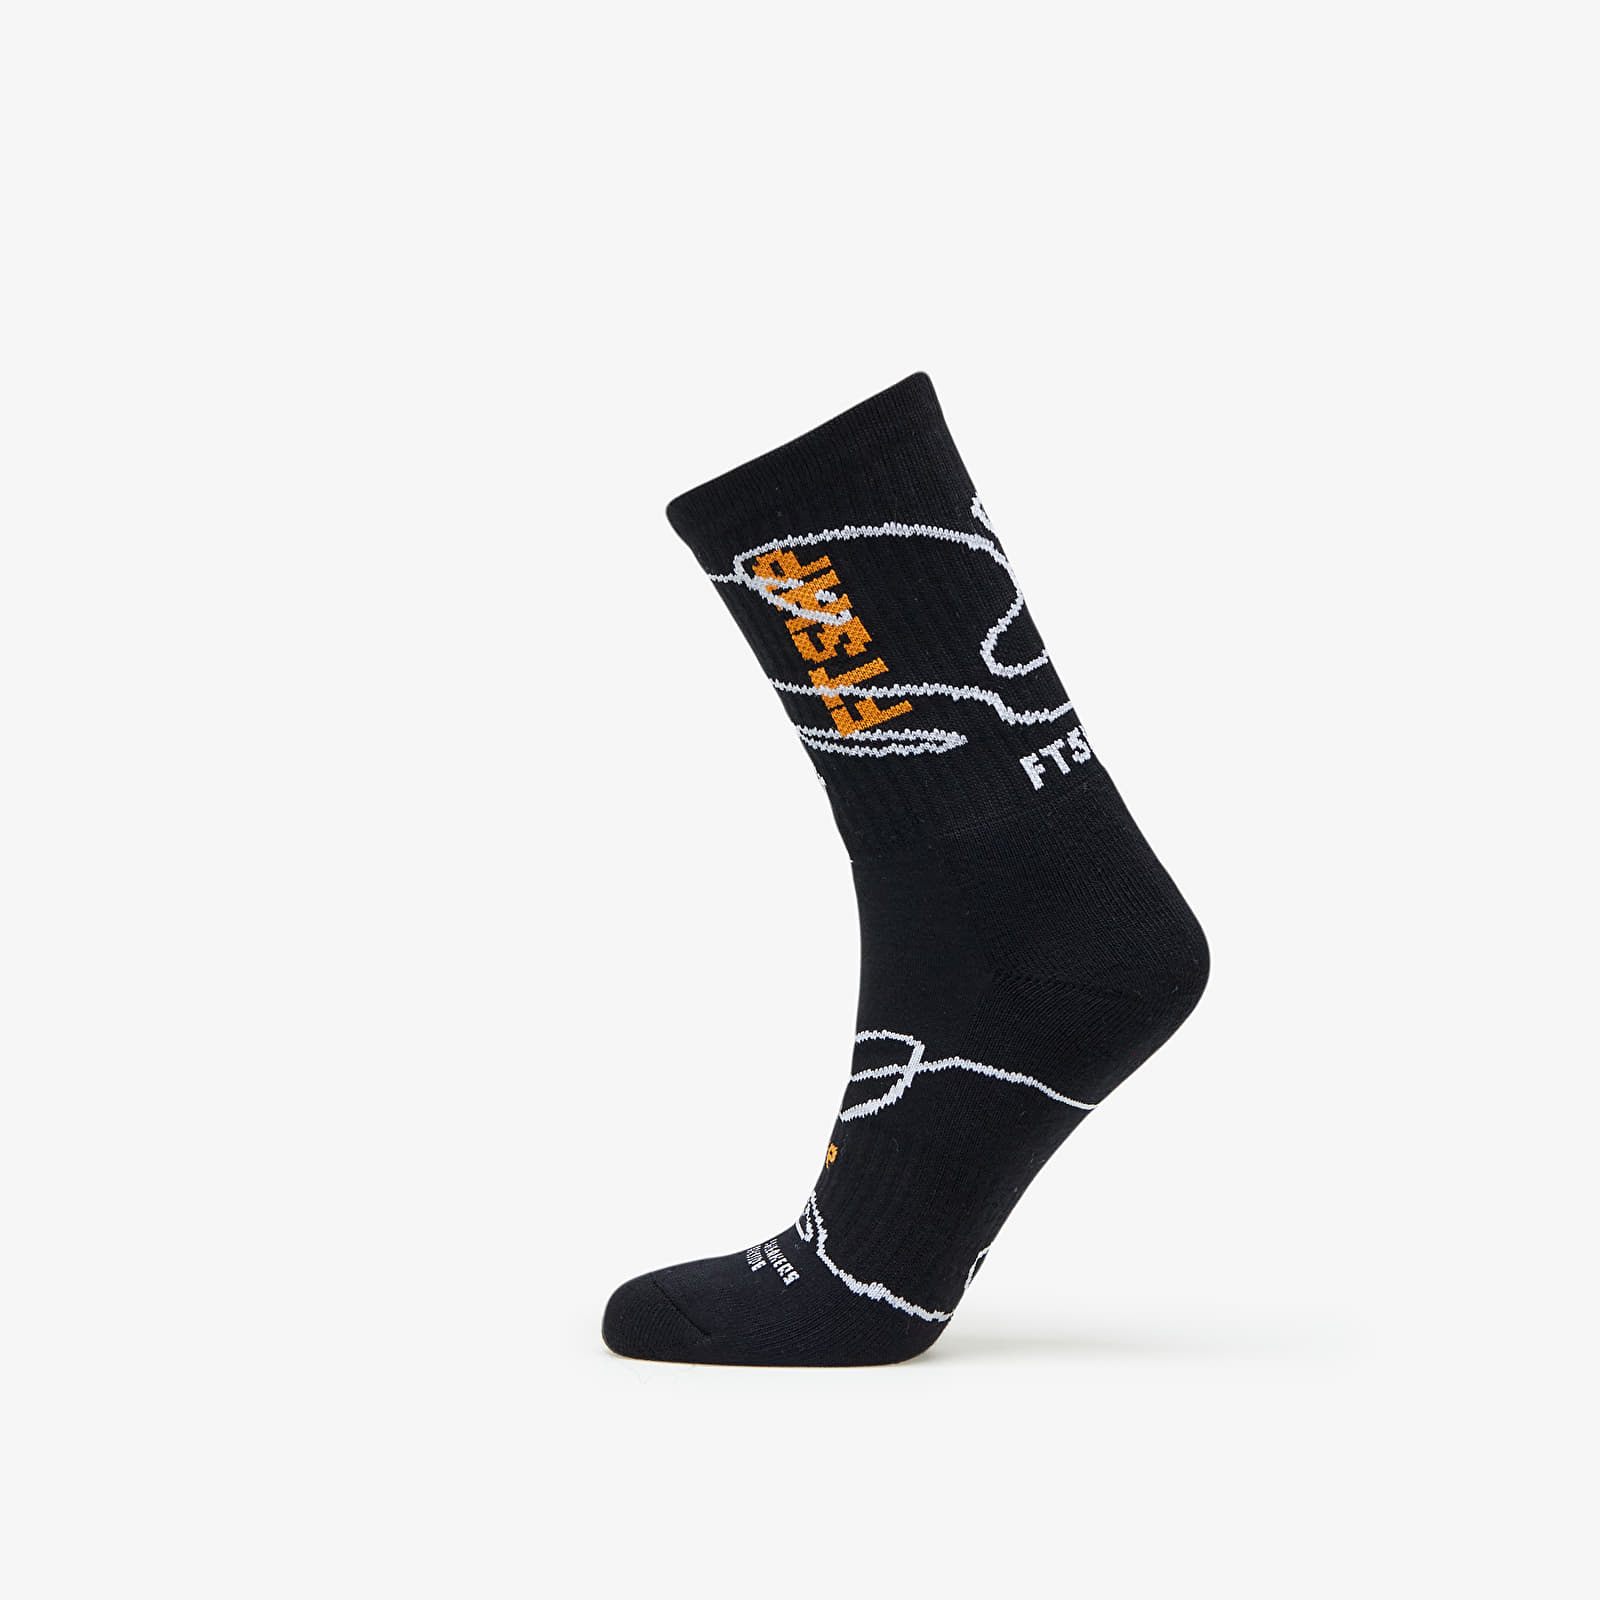 Socks Footshop The Skateboard Socks Black/ Orange